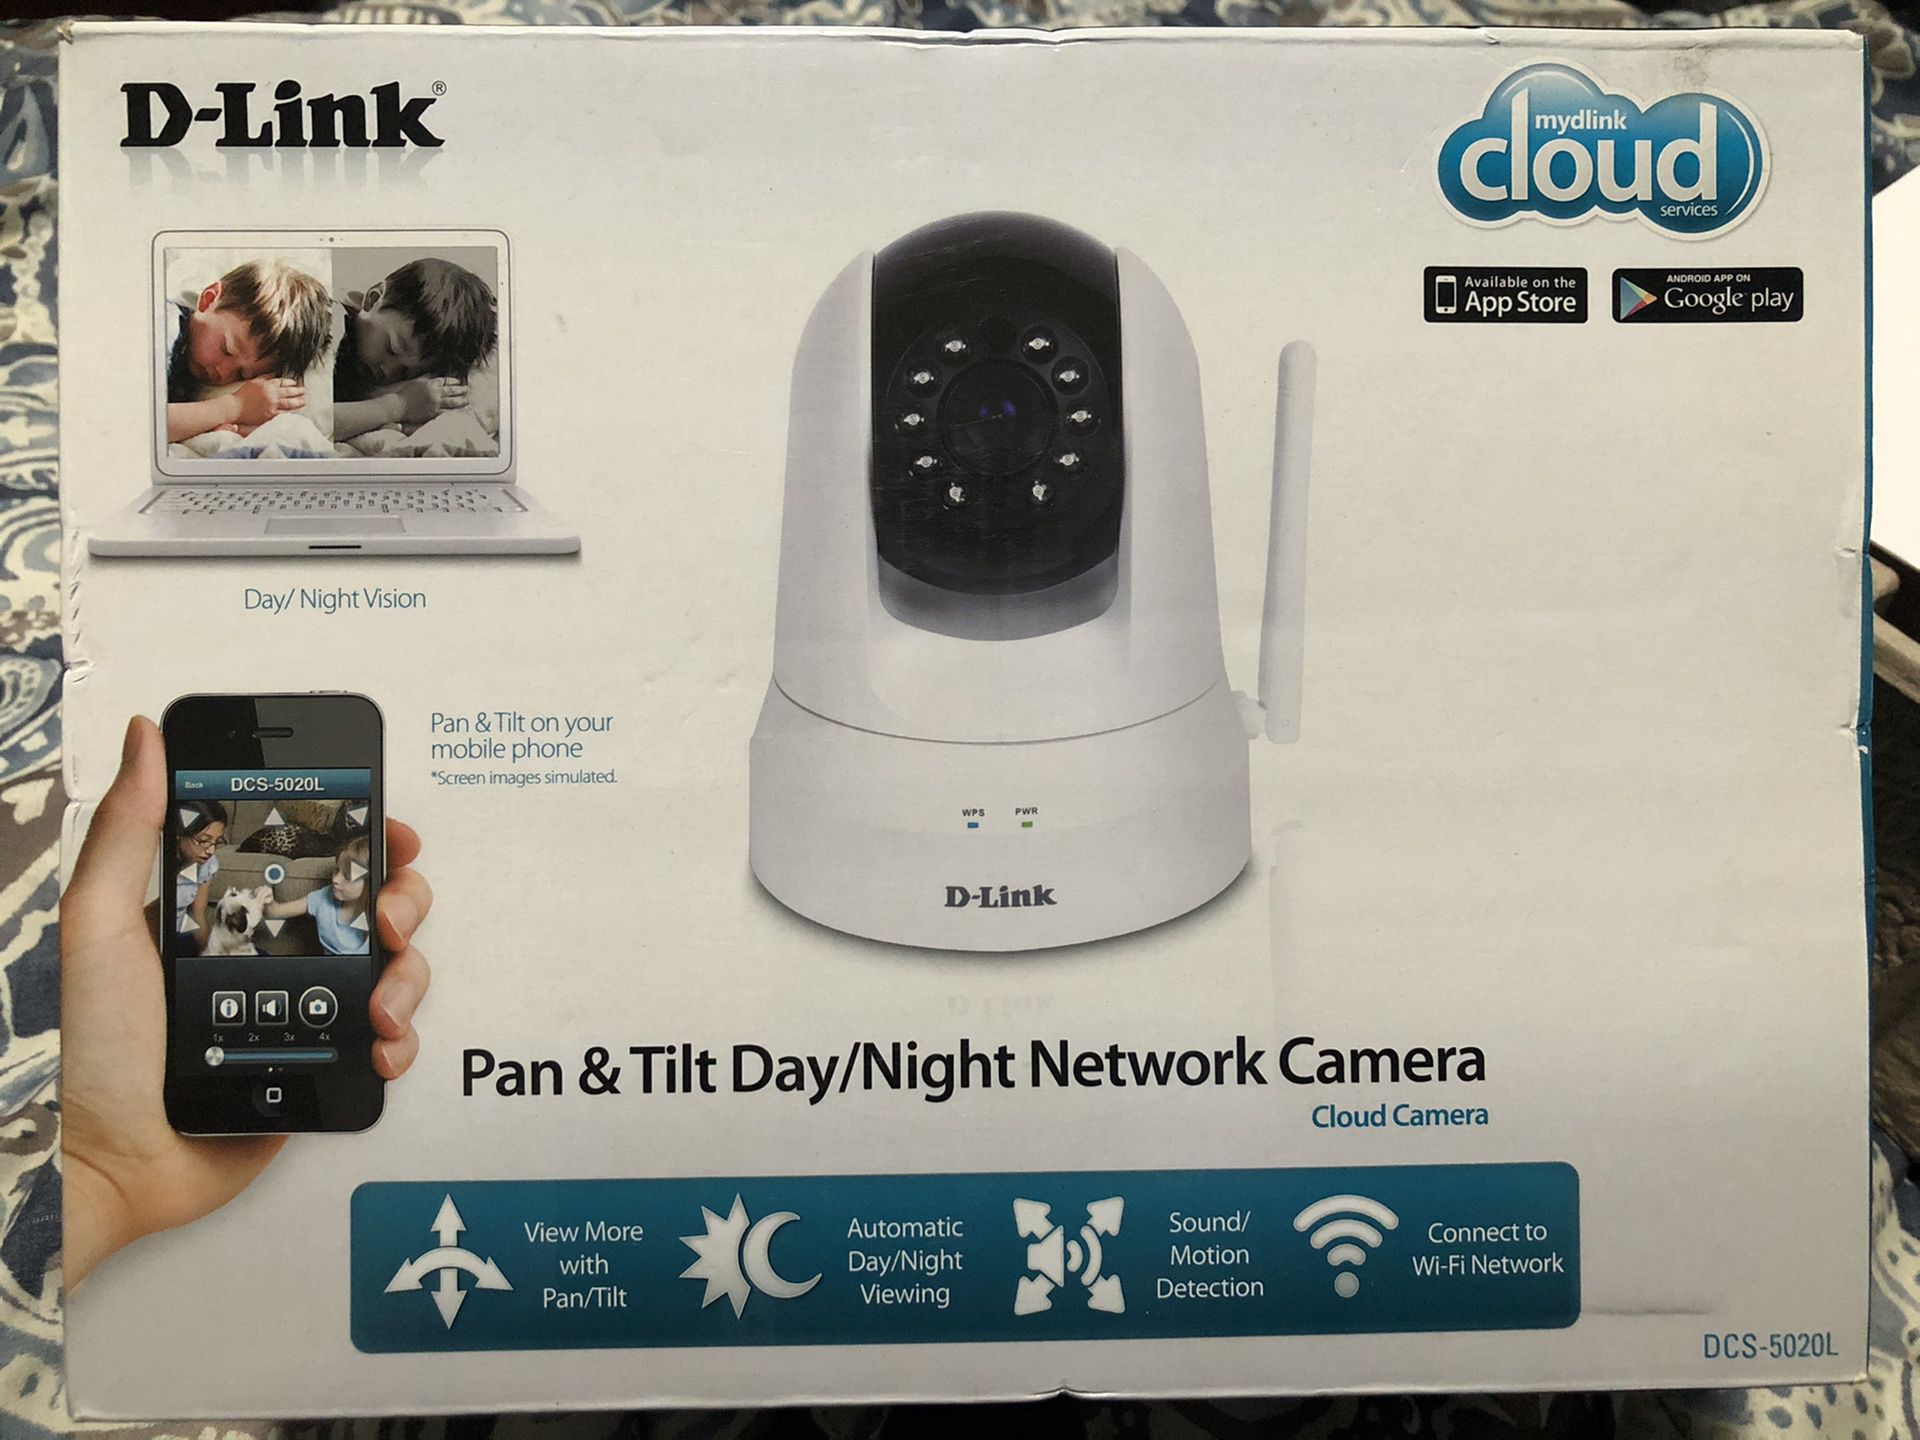 D-Link Pan & Tilt Day/Night Network Camera